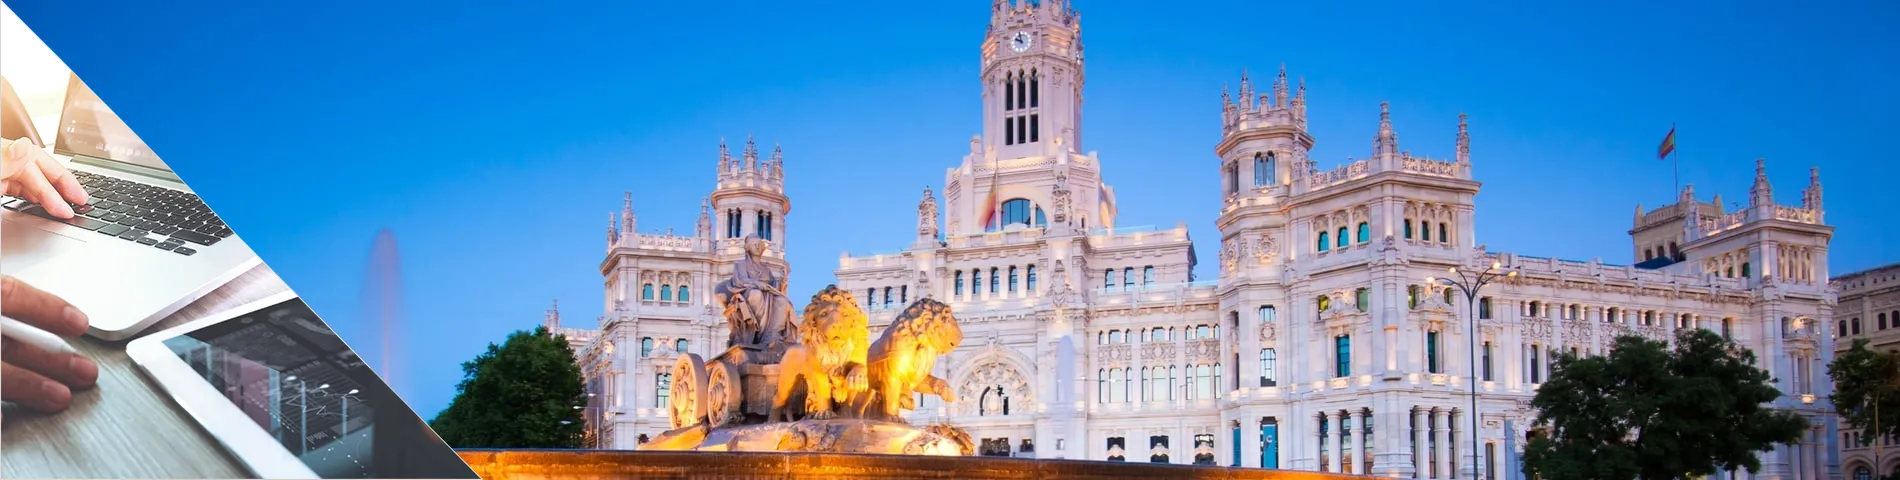 Madrid - Spaans & digitale media